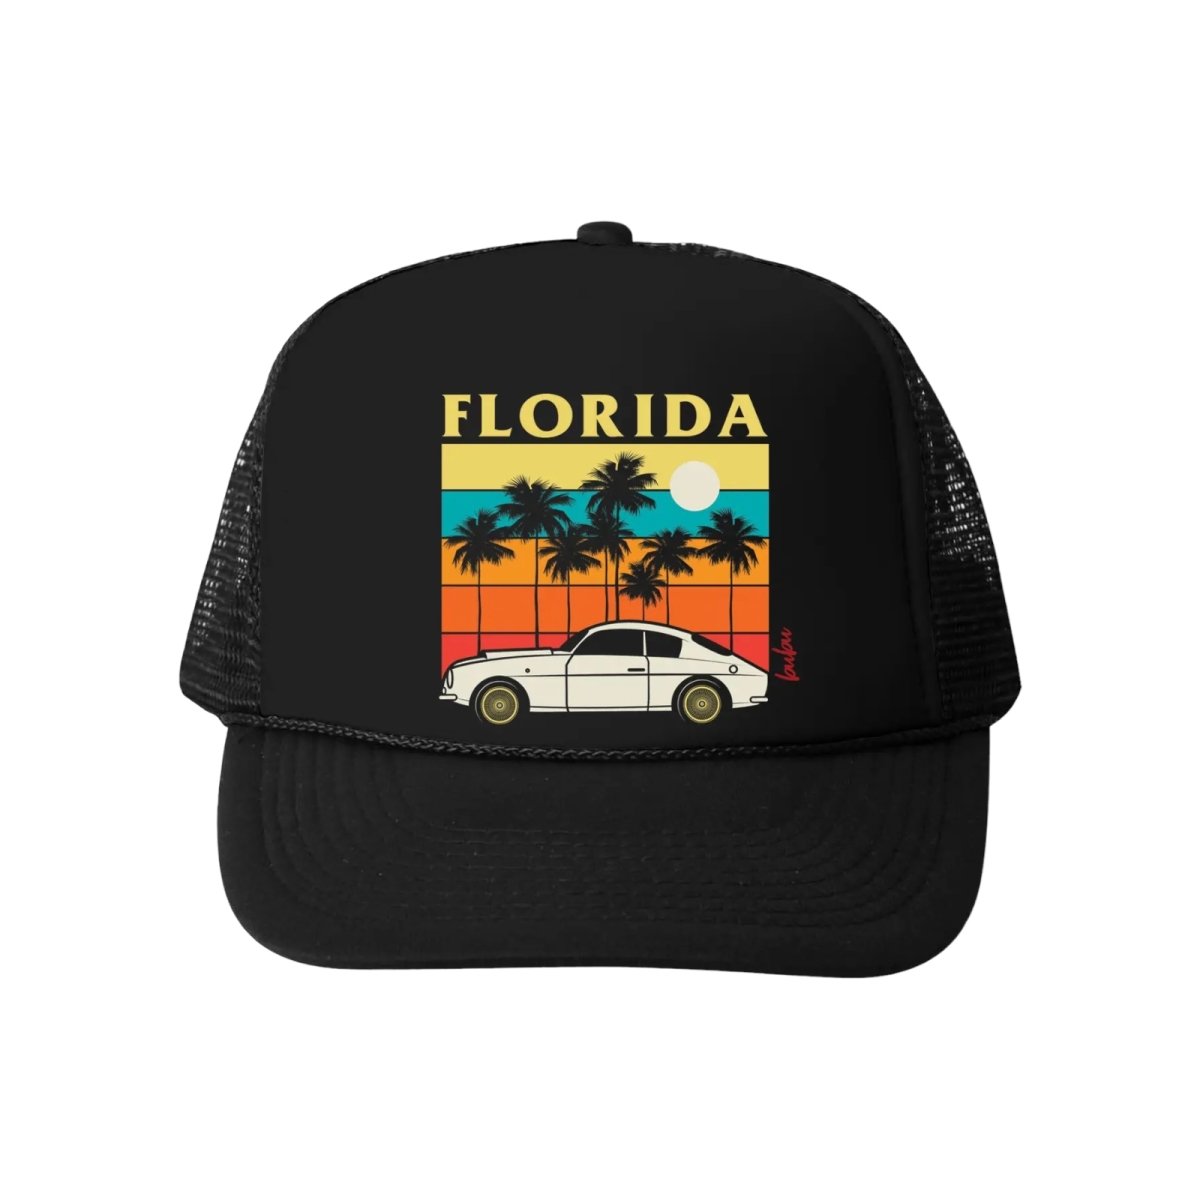 FLORIDA TURBO TRUCKER HAT - HATS